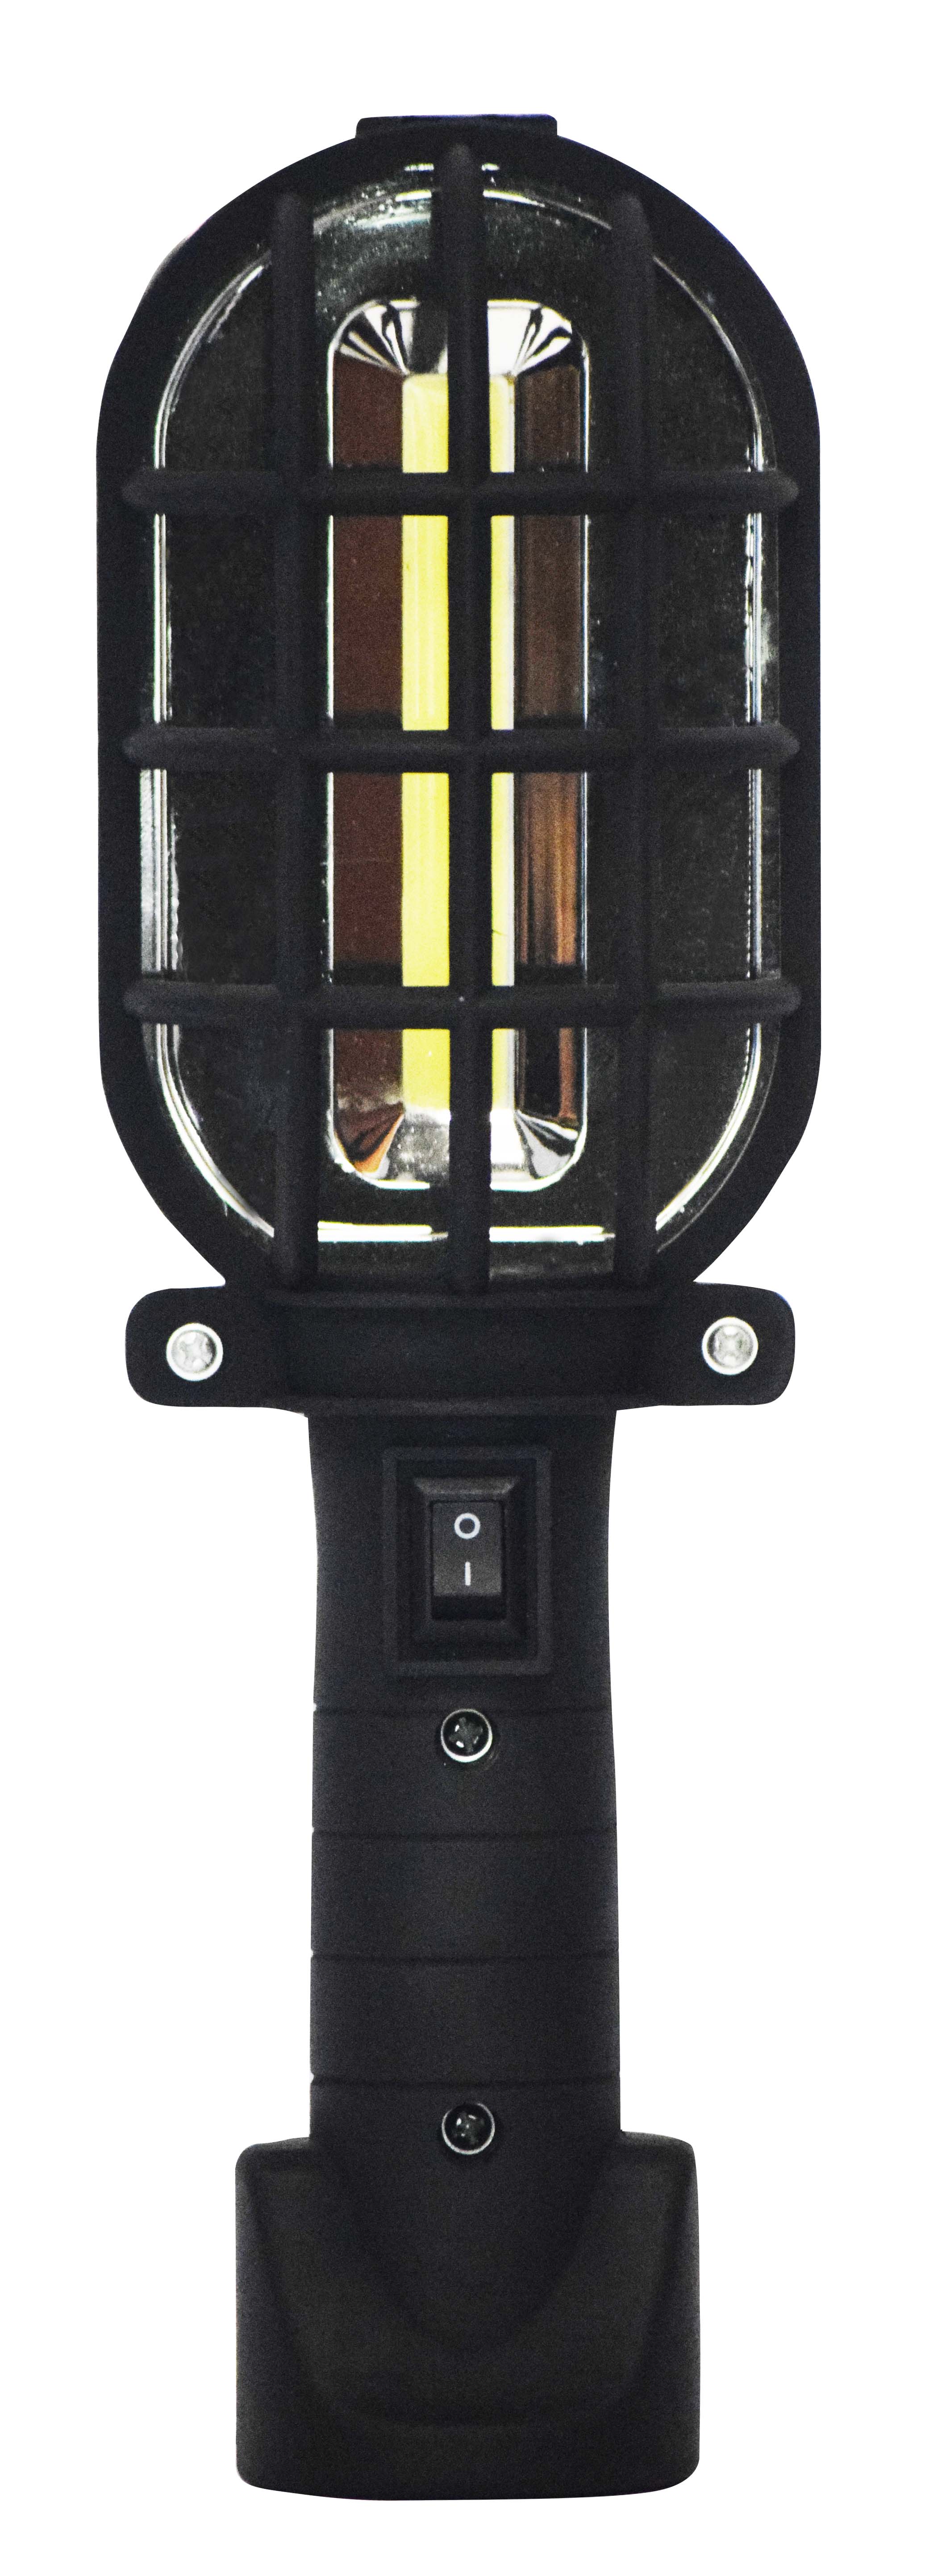 FAROS 3W COB INSPECTION LAMP